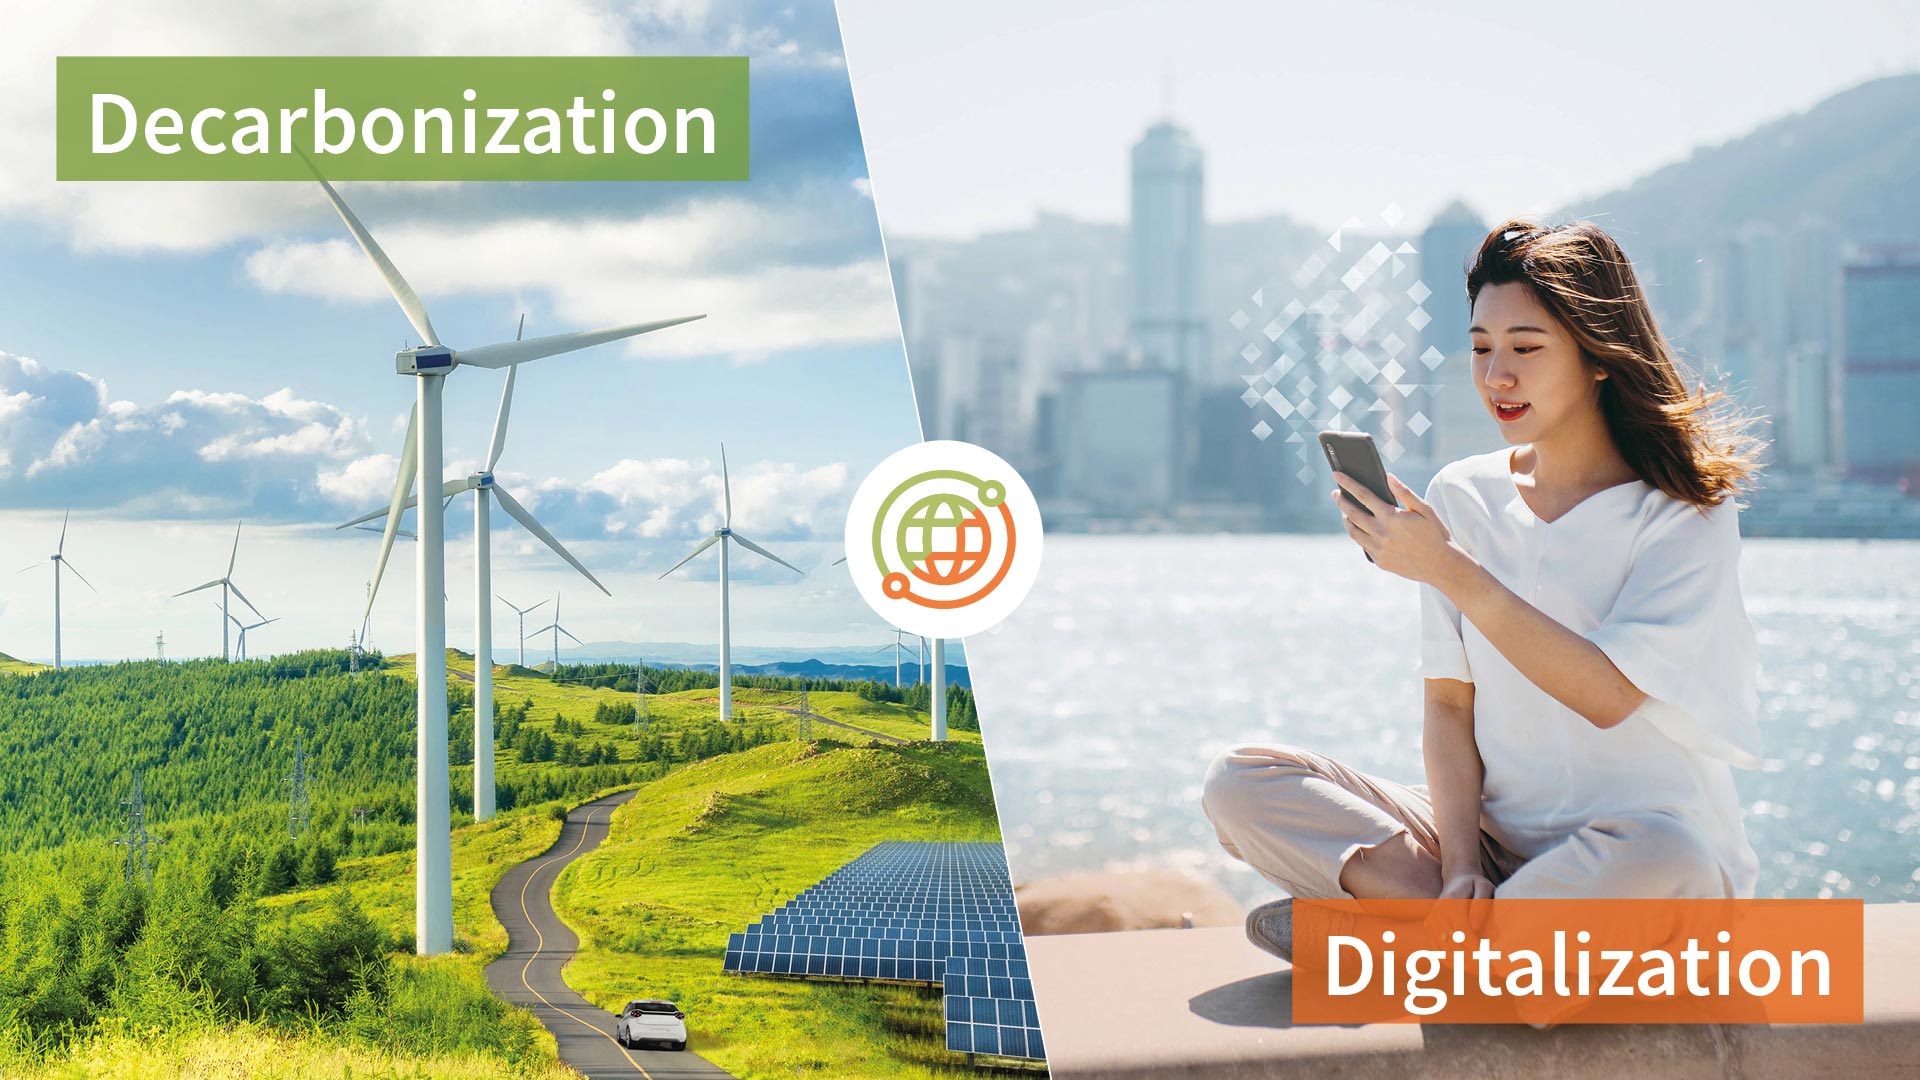 OktoberTech Decarbonization and Digitalization